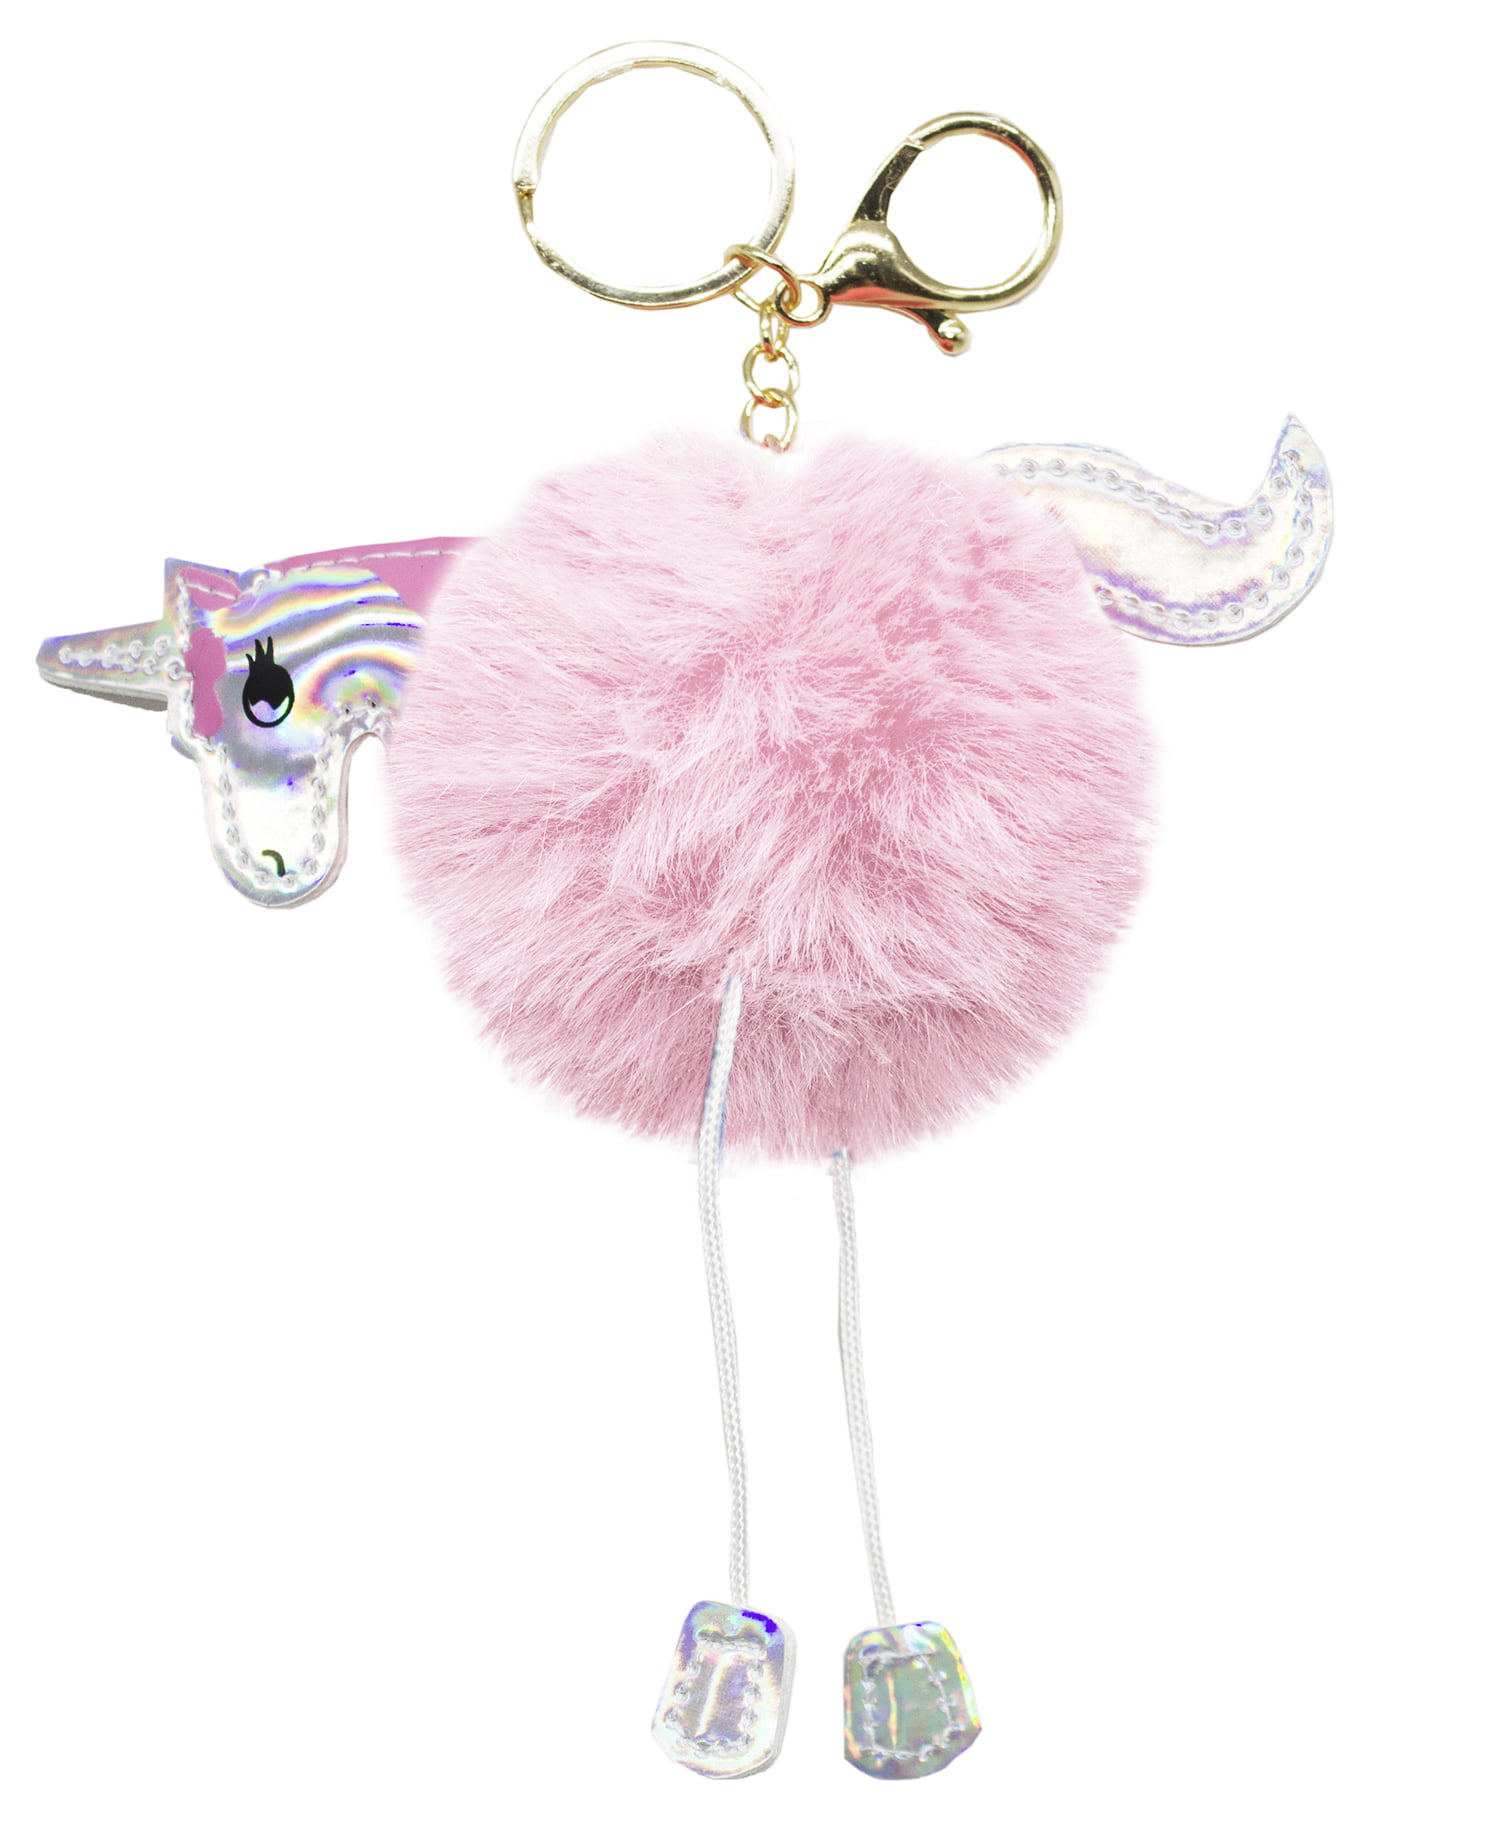 Unicorn Plush Fluffy Keychain Colorful Keychain For Car Decoration Handbag Tote Bag Charm Pendant Key Ring